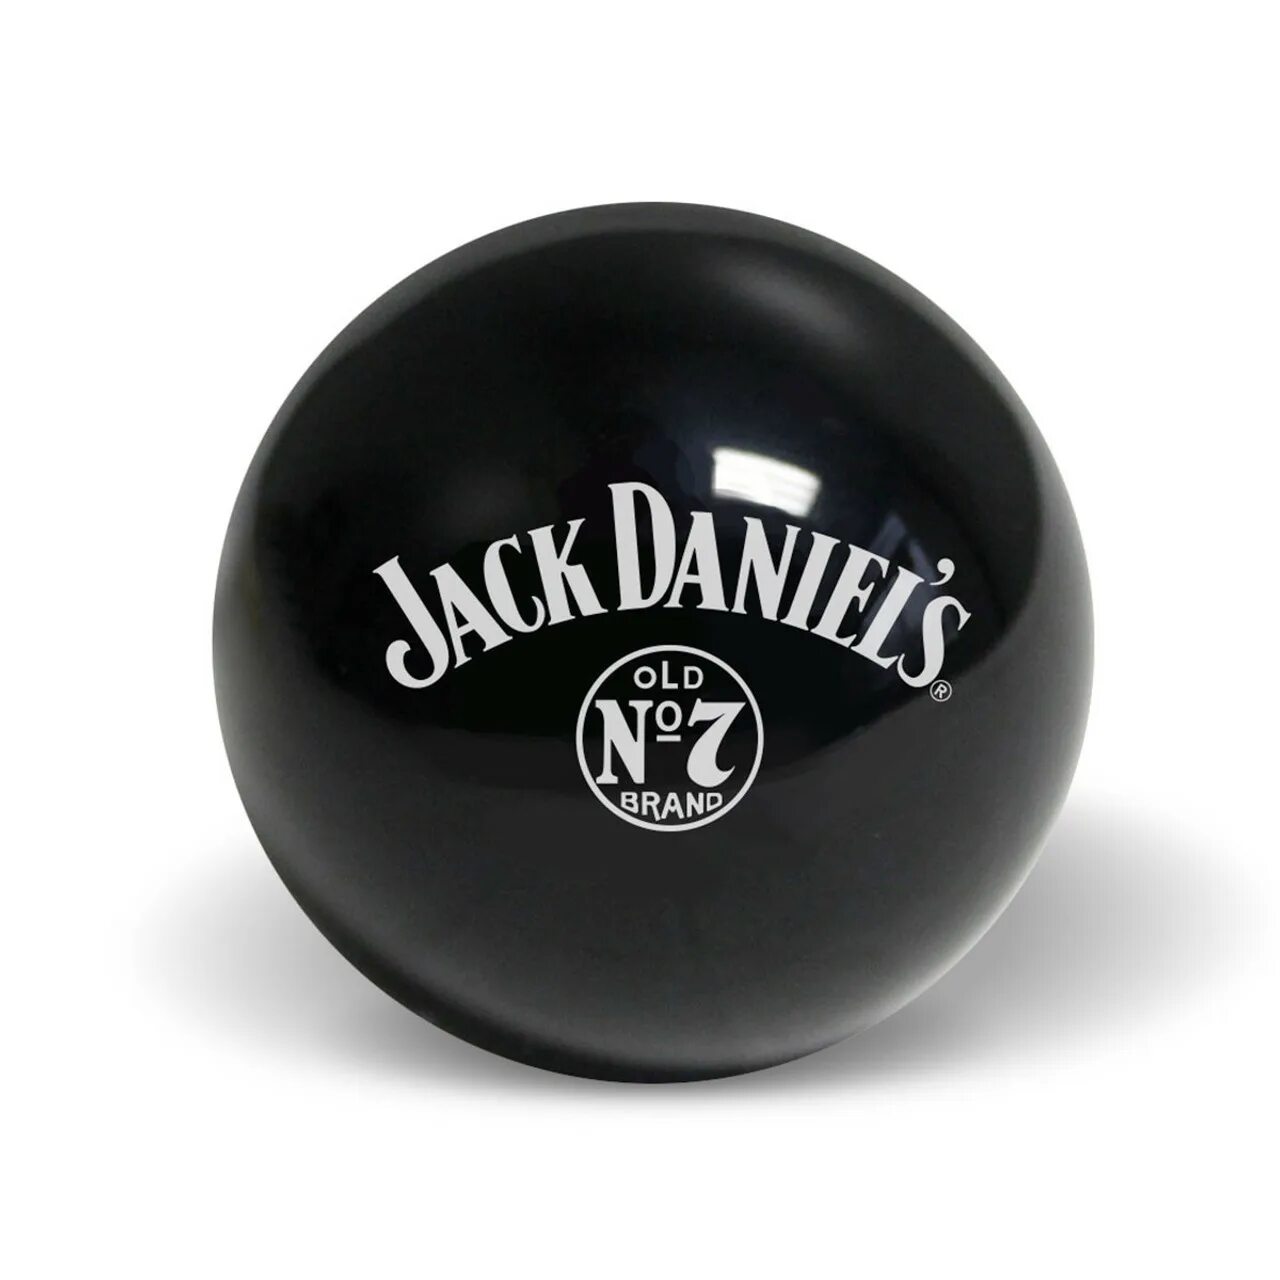 Jack balls. Шар для бильярда. Круг Джек Дэниэлс шар. Даниэль шара. Джек Дэниэлс шарики композиция.